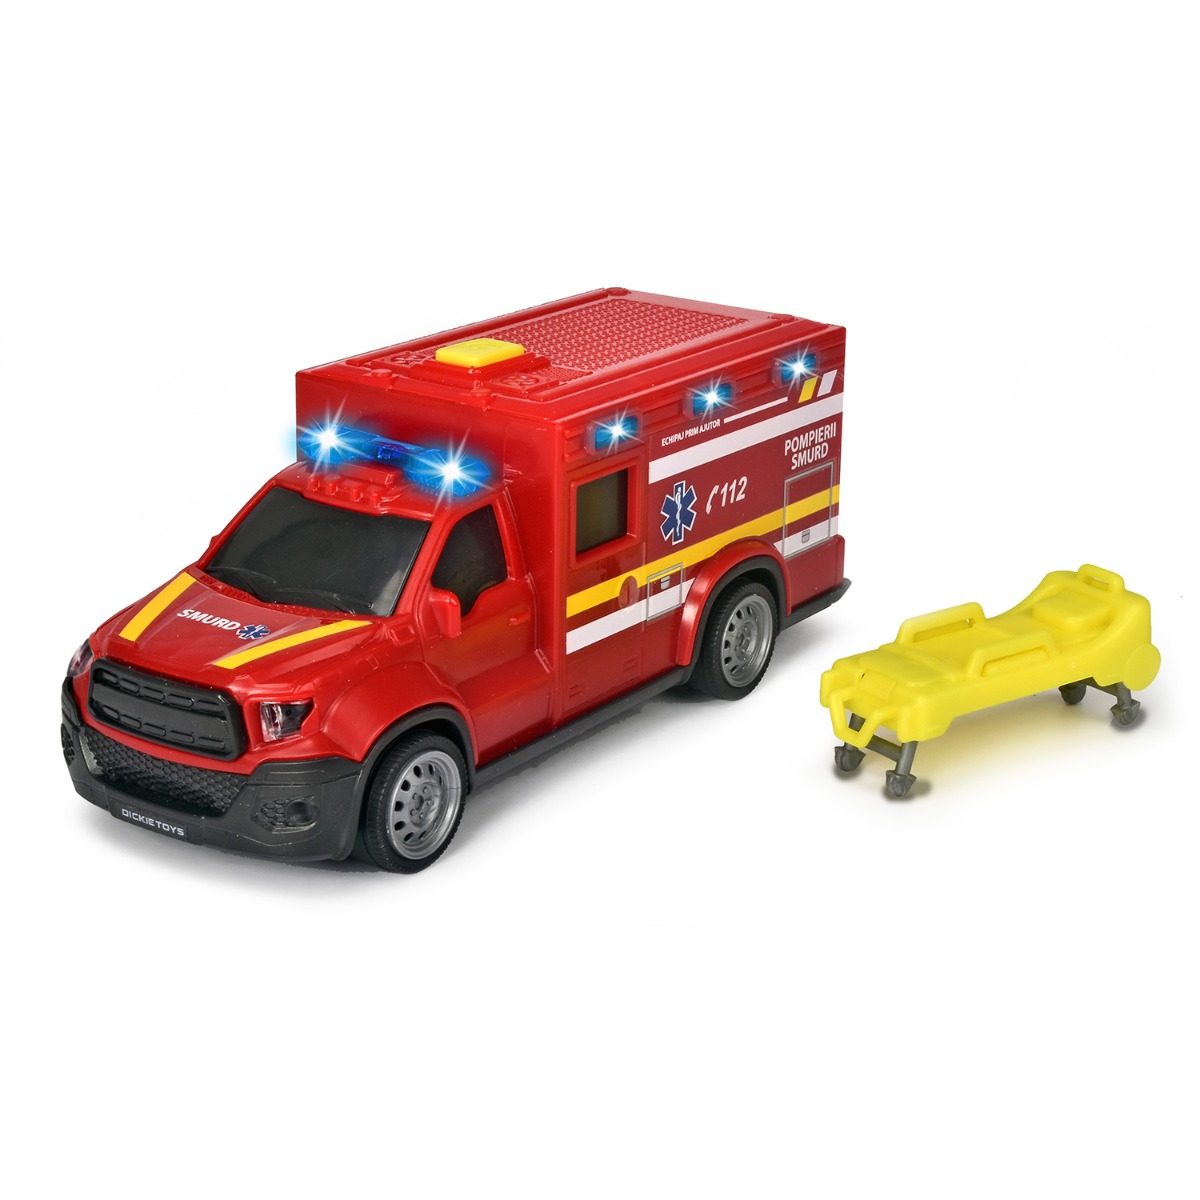 Masinuta de ambulanta Pompierii Smurd Dickie Toys, 1:32